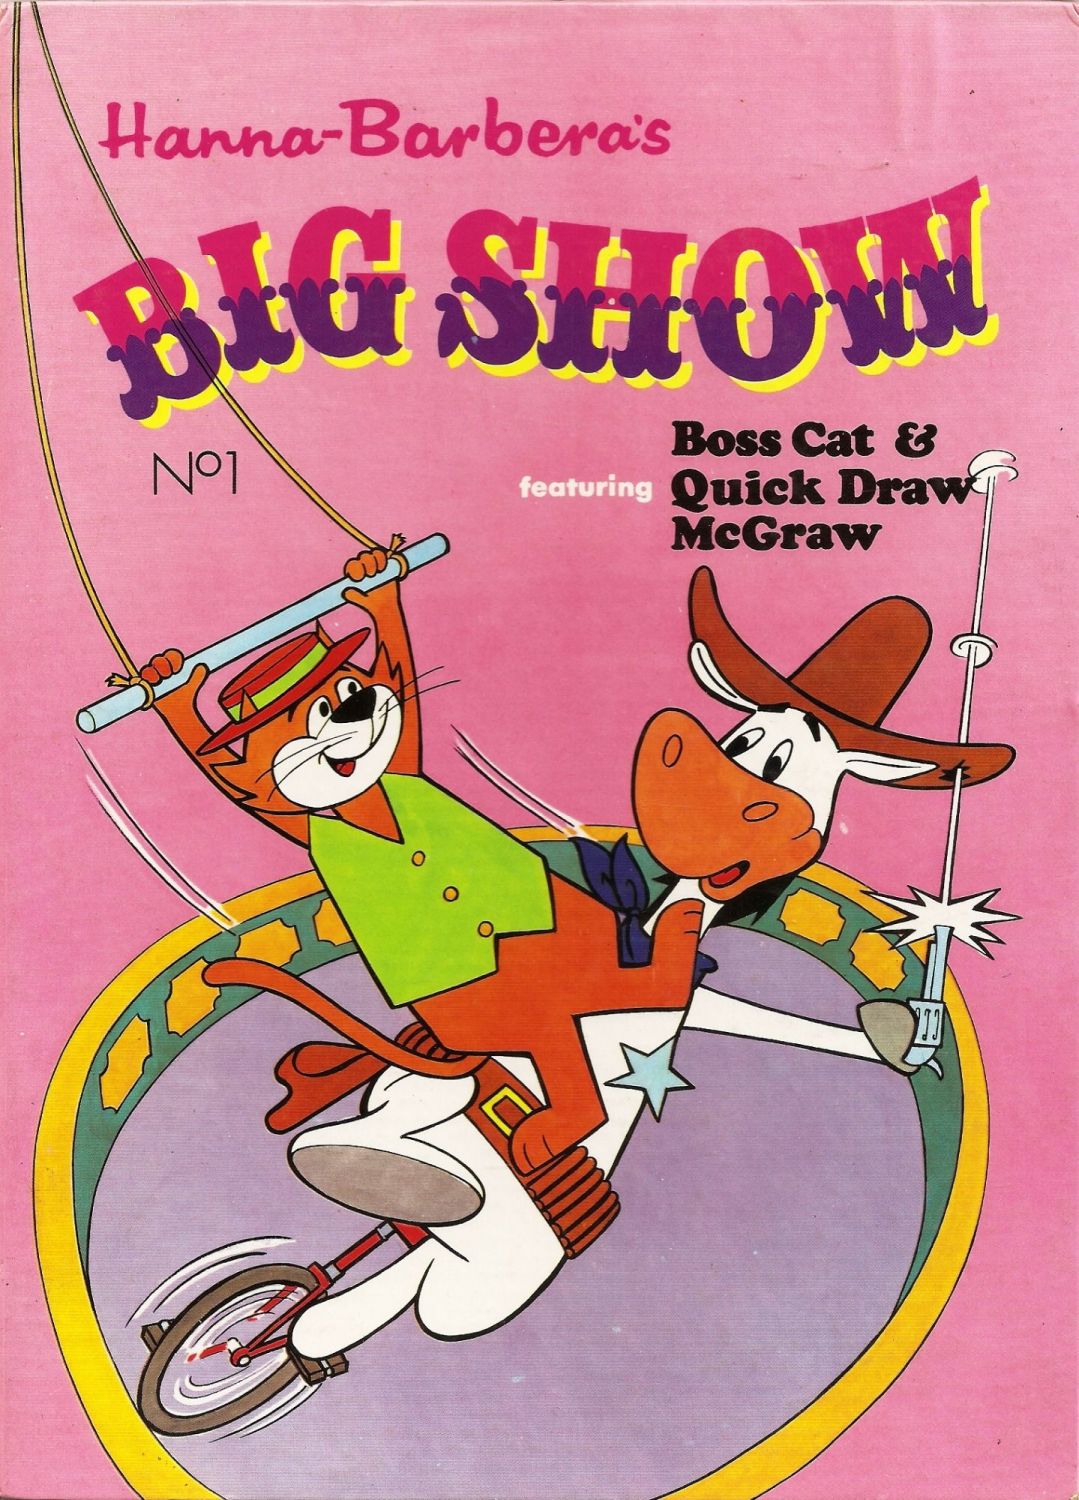 Hanna-Barbera's Big Show No. 1 Annual (Featuring Boss (Top) Cat & Quick  Draw McGraw) - 1972